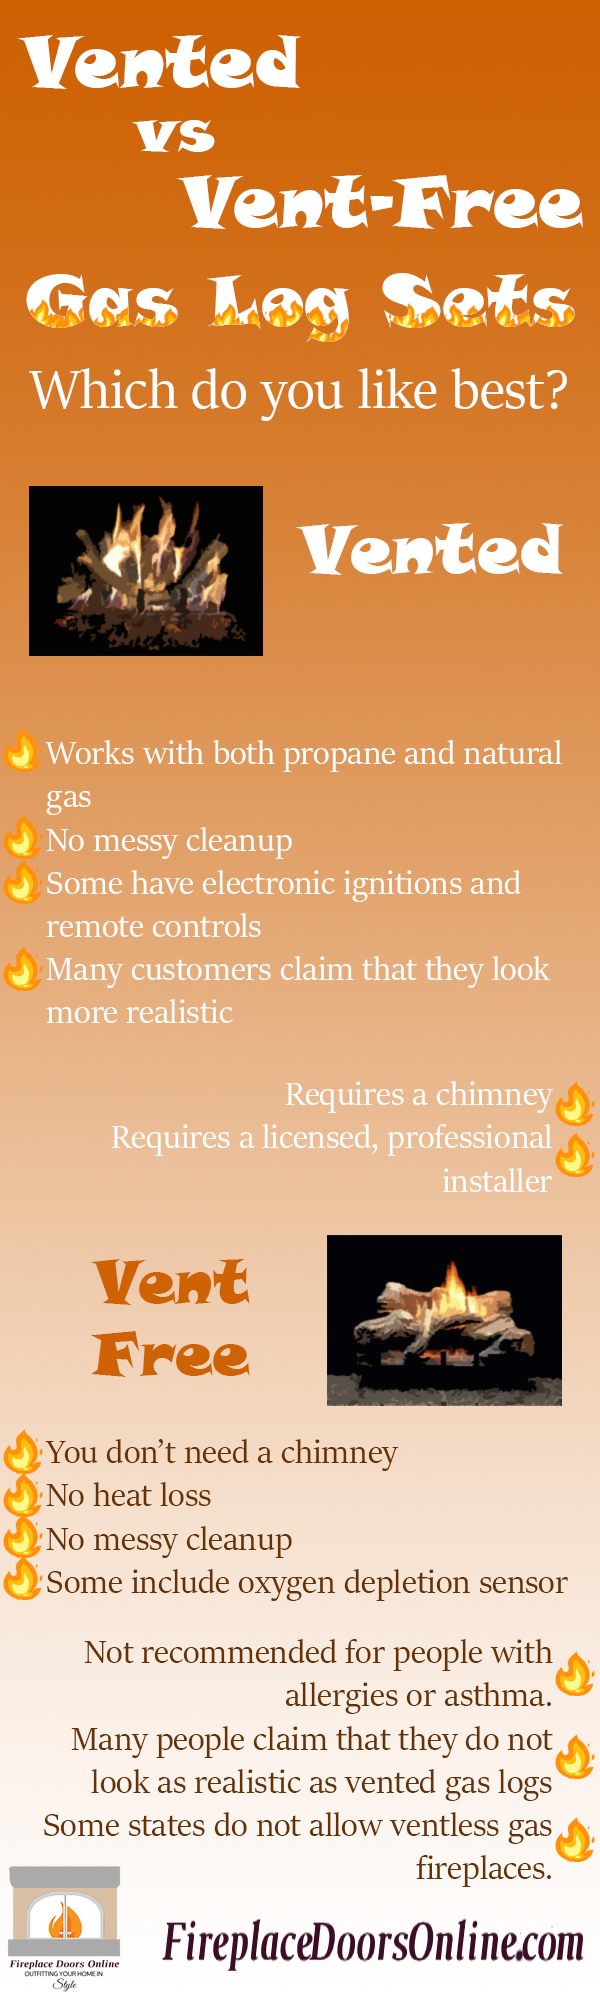 Vented VS Vent-Free Gas Logs